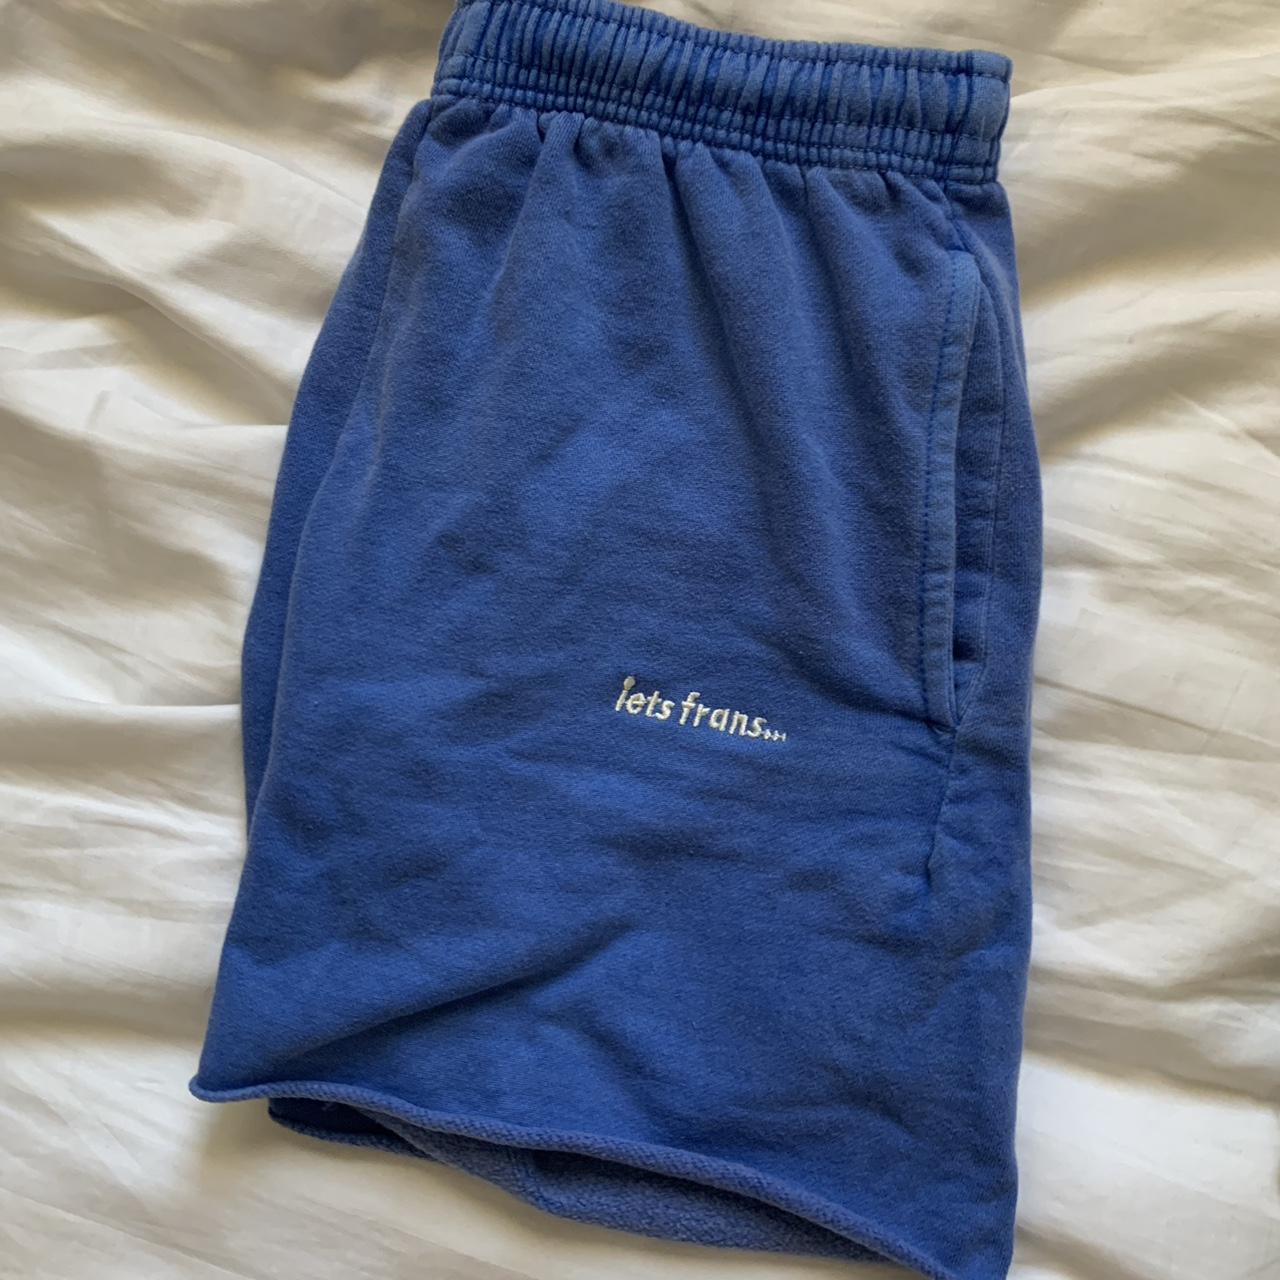 iets frans... Women's Blue Shorts | Depop